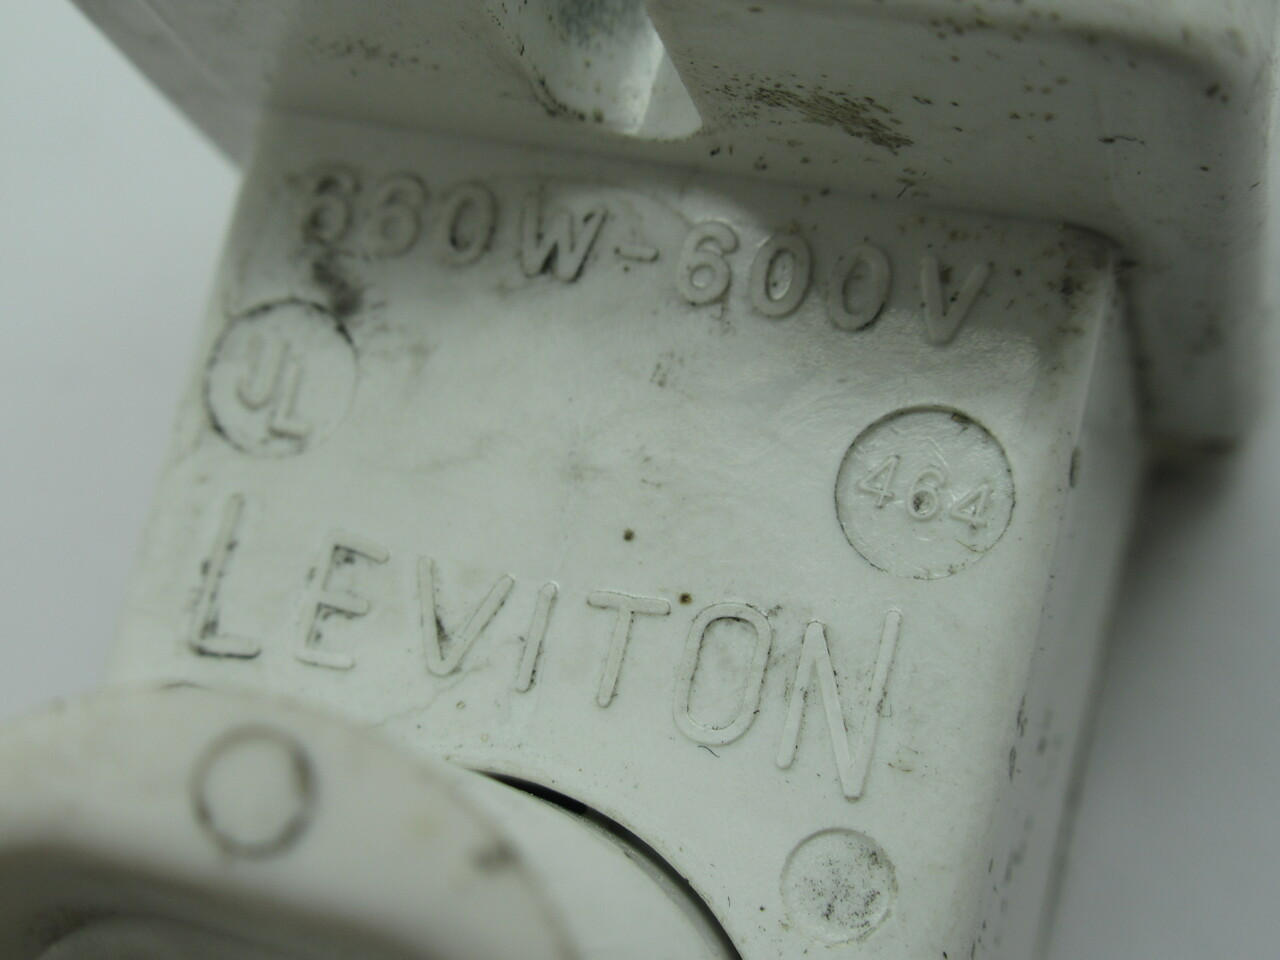 Leviton 464 Fluorescent Lampholder 660W 600V *SHELF WEAR* USED